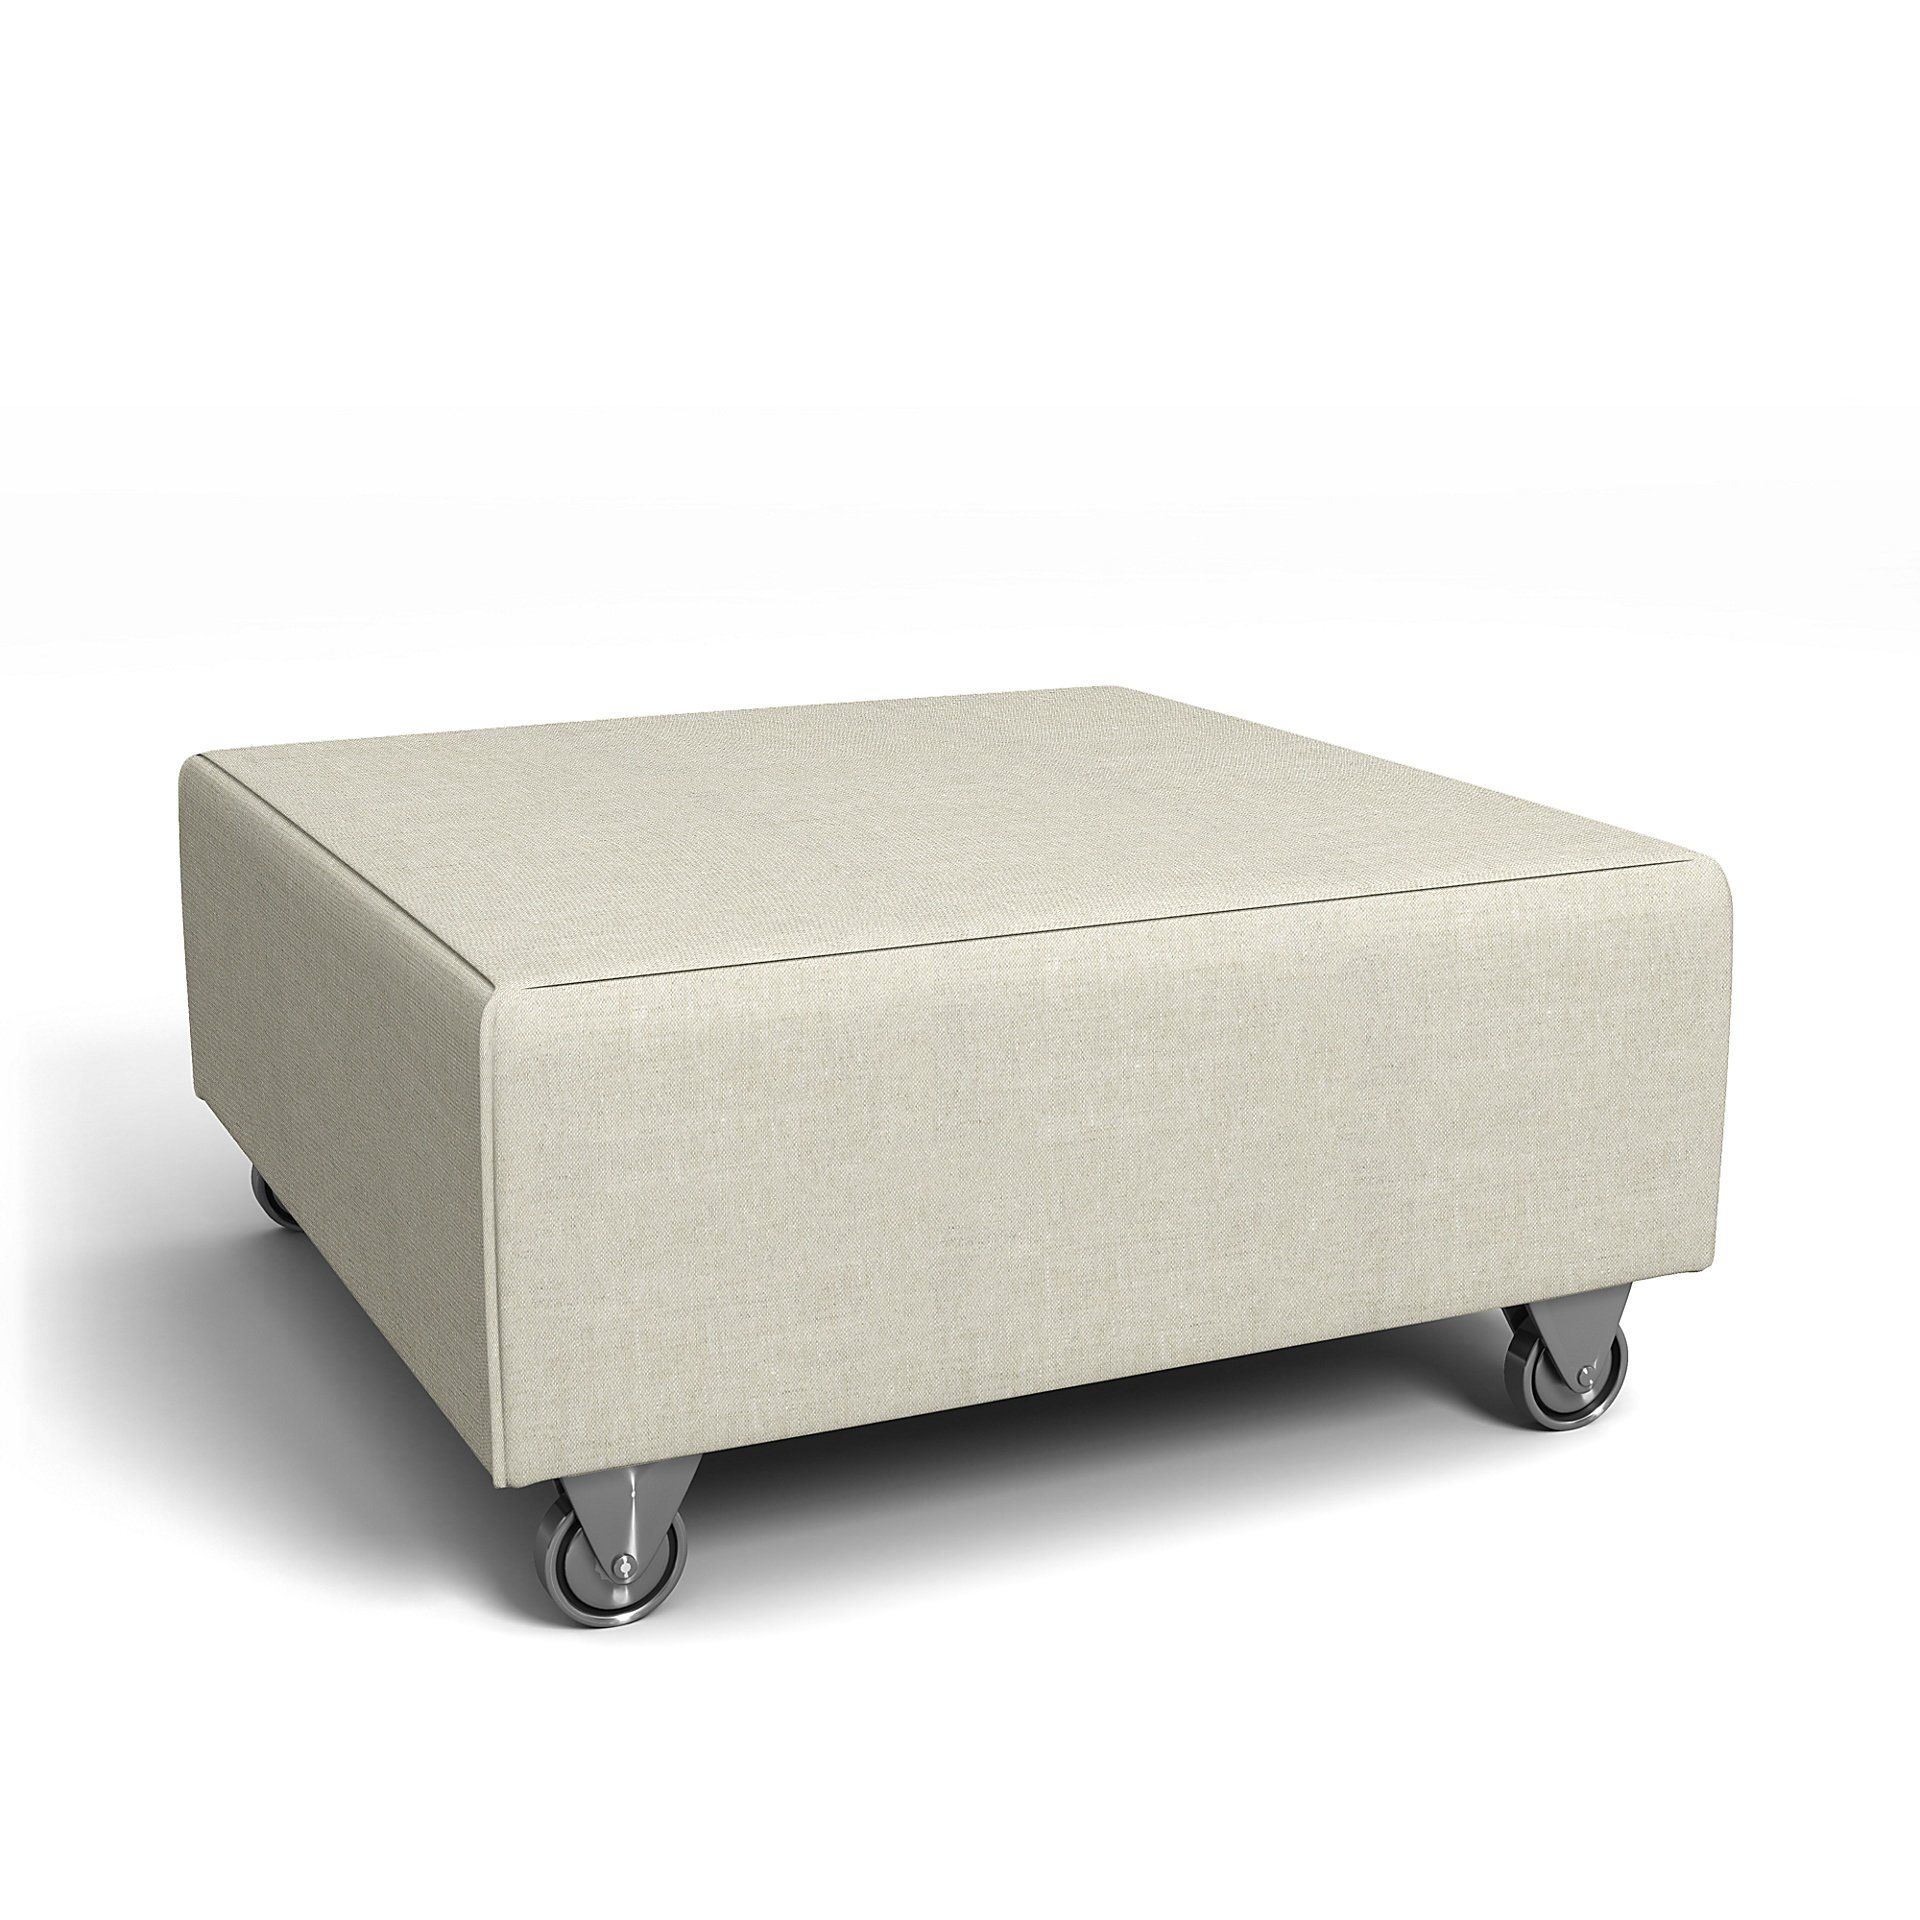 IKEA - Falsterbo Footstool Cover, Natural, Linen - Bemz